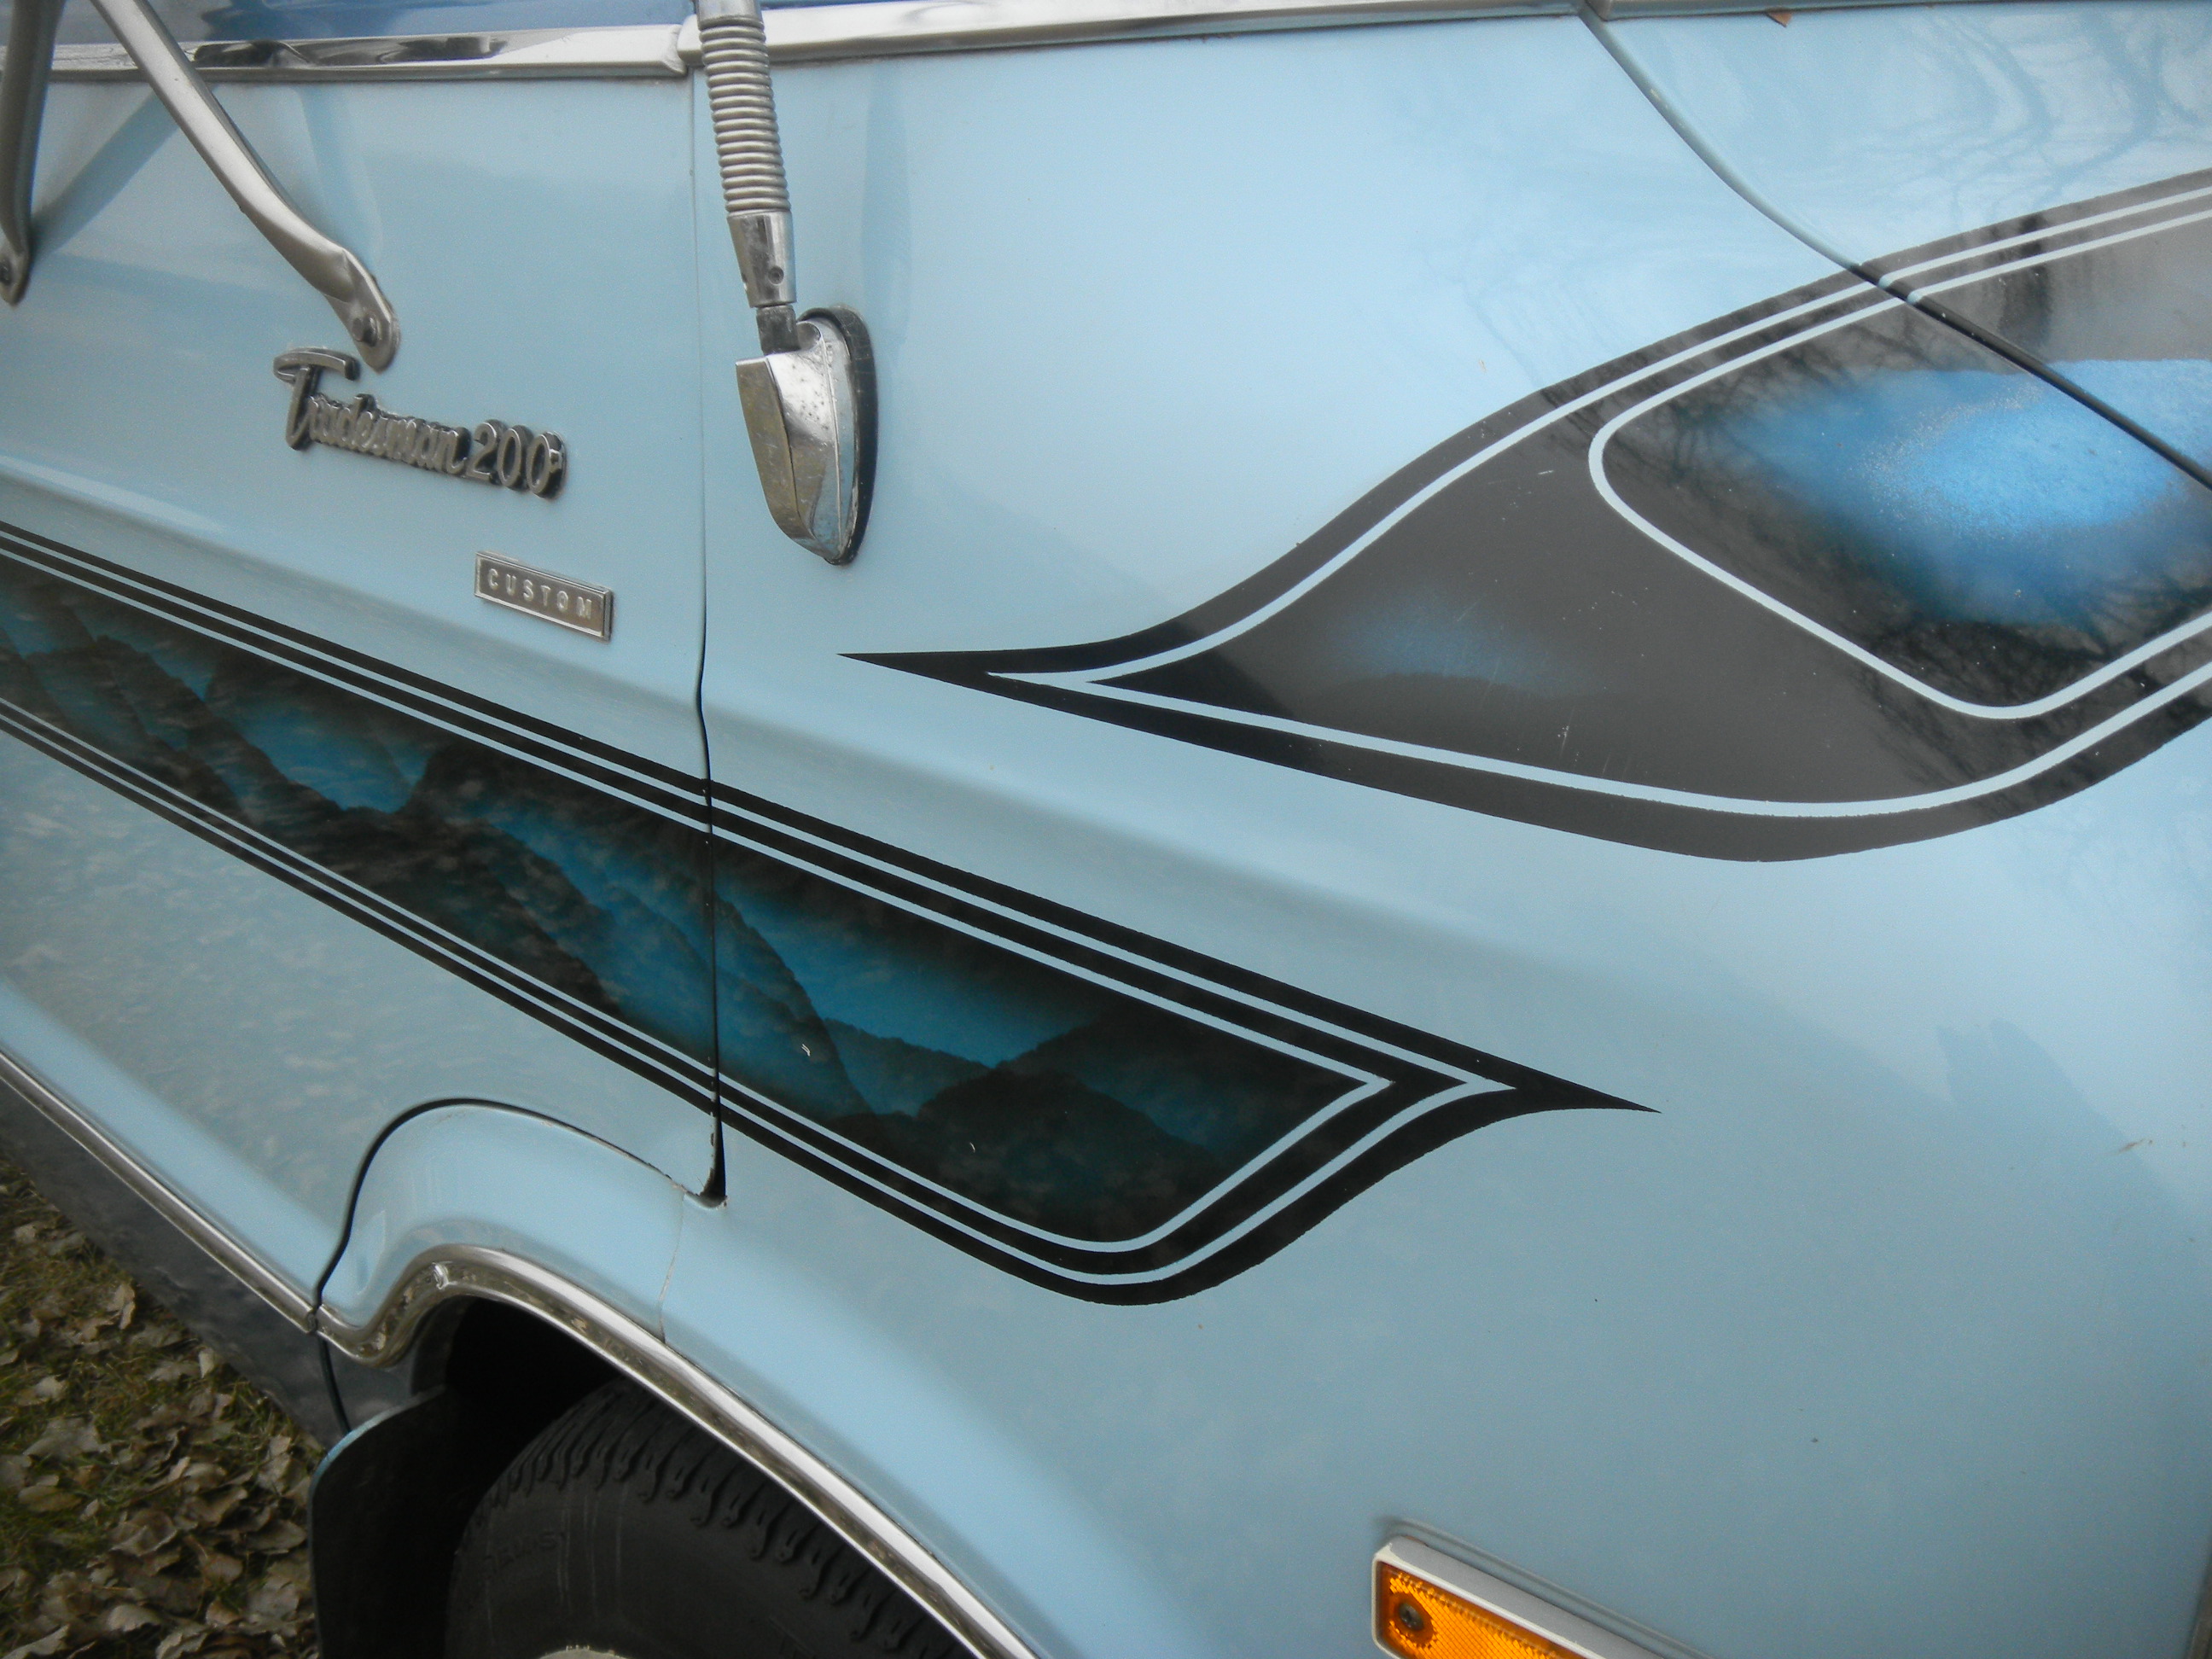 1977 Dodge Tradesman 200 custom maxivan. | Flickr - Photo Sharing!